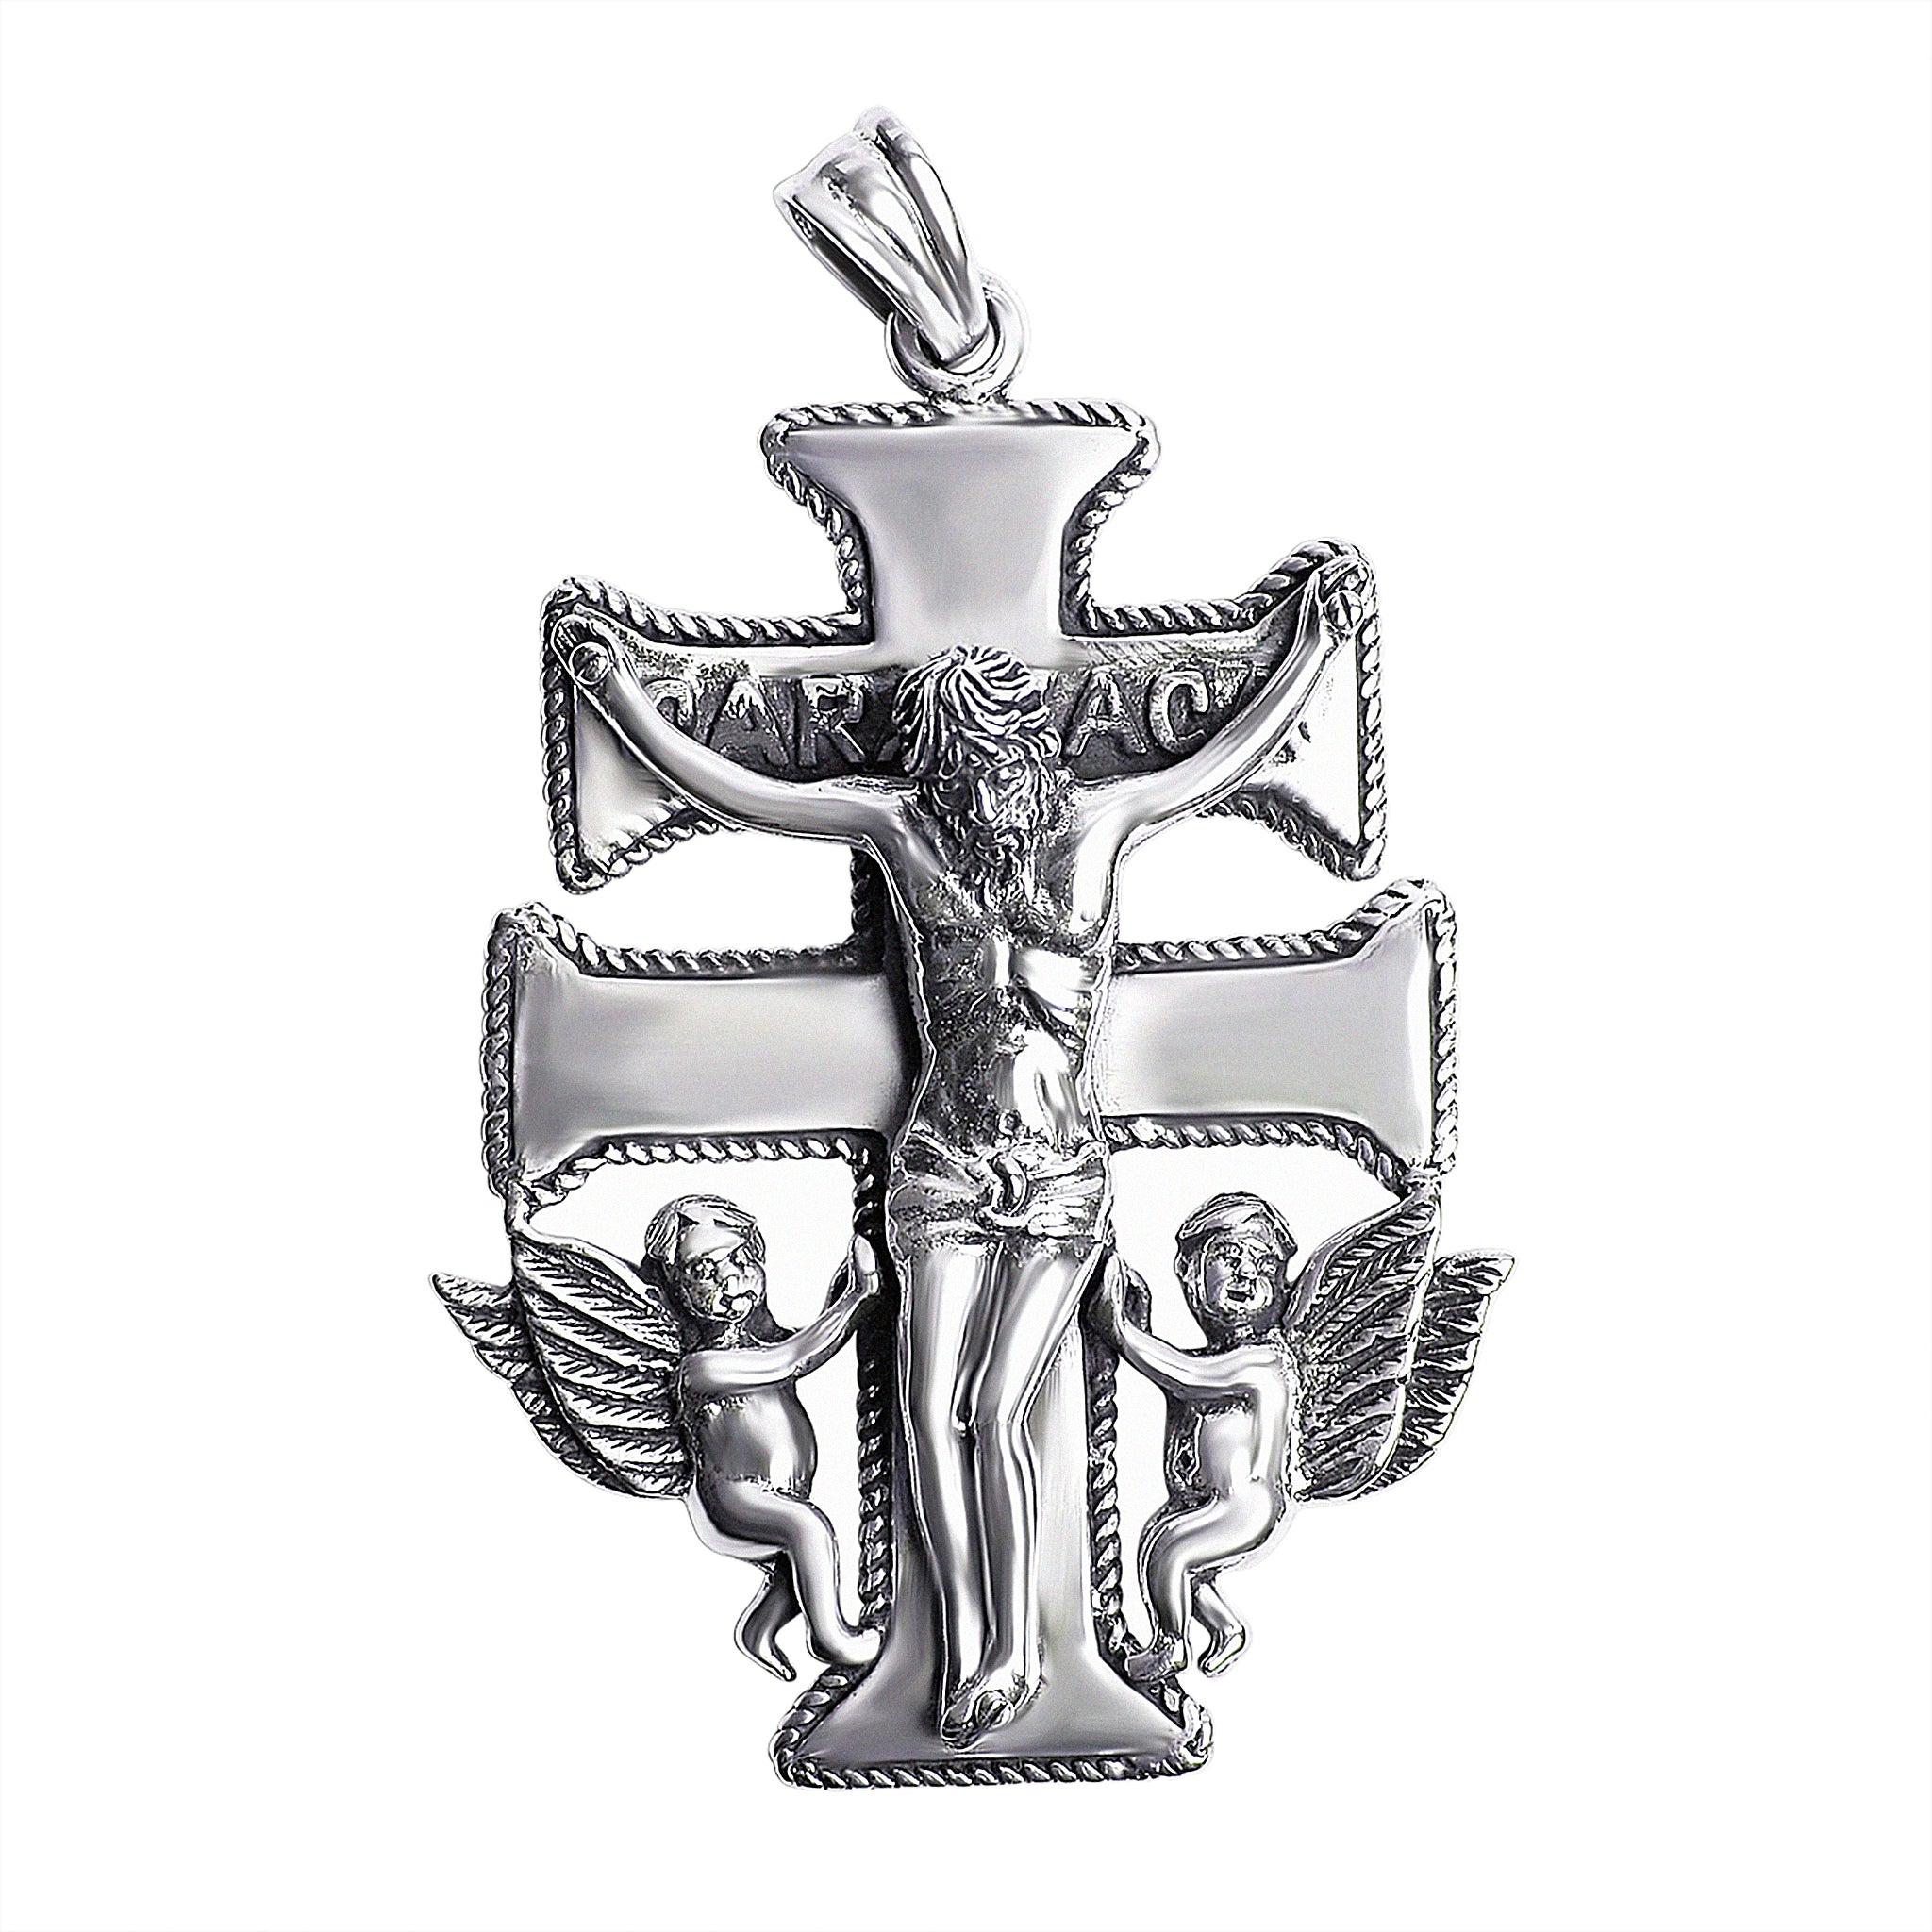 Sterling Silver Caravaca Crucifix Cross Pendant / SSP0067-sterling silver pendant- .925 sterling silver pendant- Black Friday Gift- silver pendant- necklace pendant